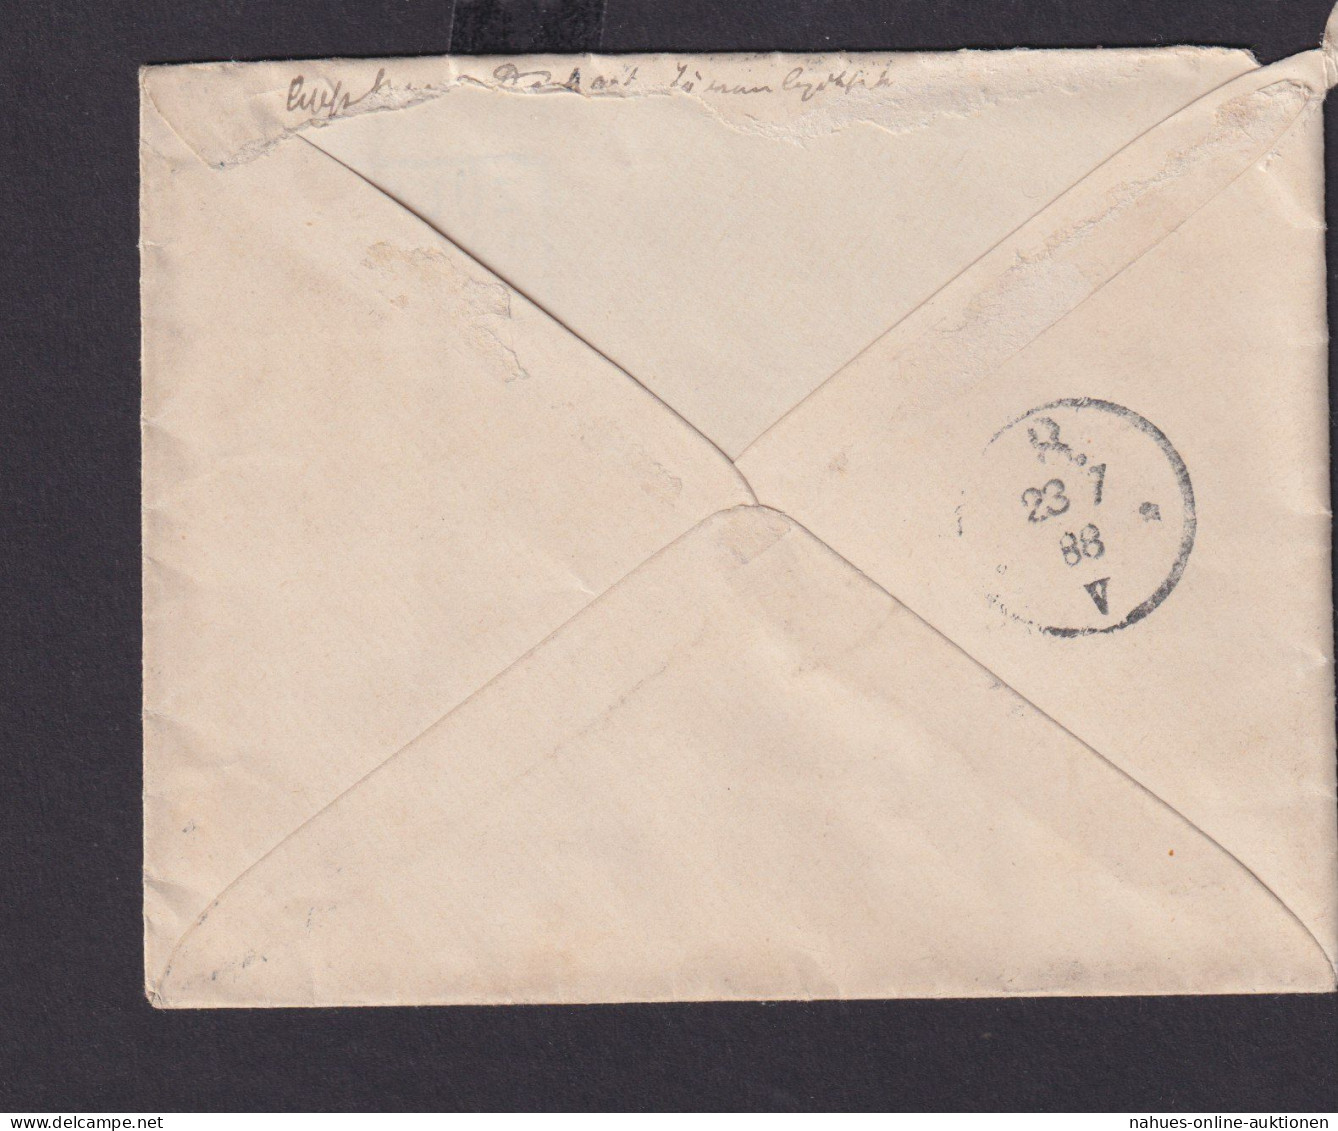 Deutsches Reich Brief Ef Pfg. R3 Züllichau R.B. FRANKFURT A.O. Nach Berlin - Storia Postale